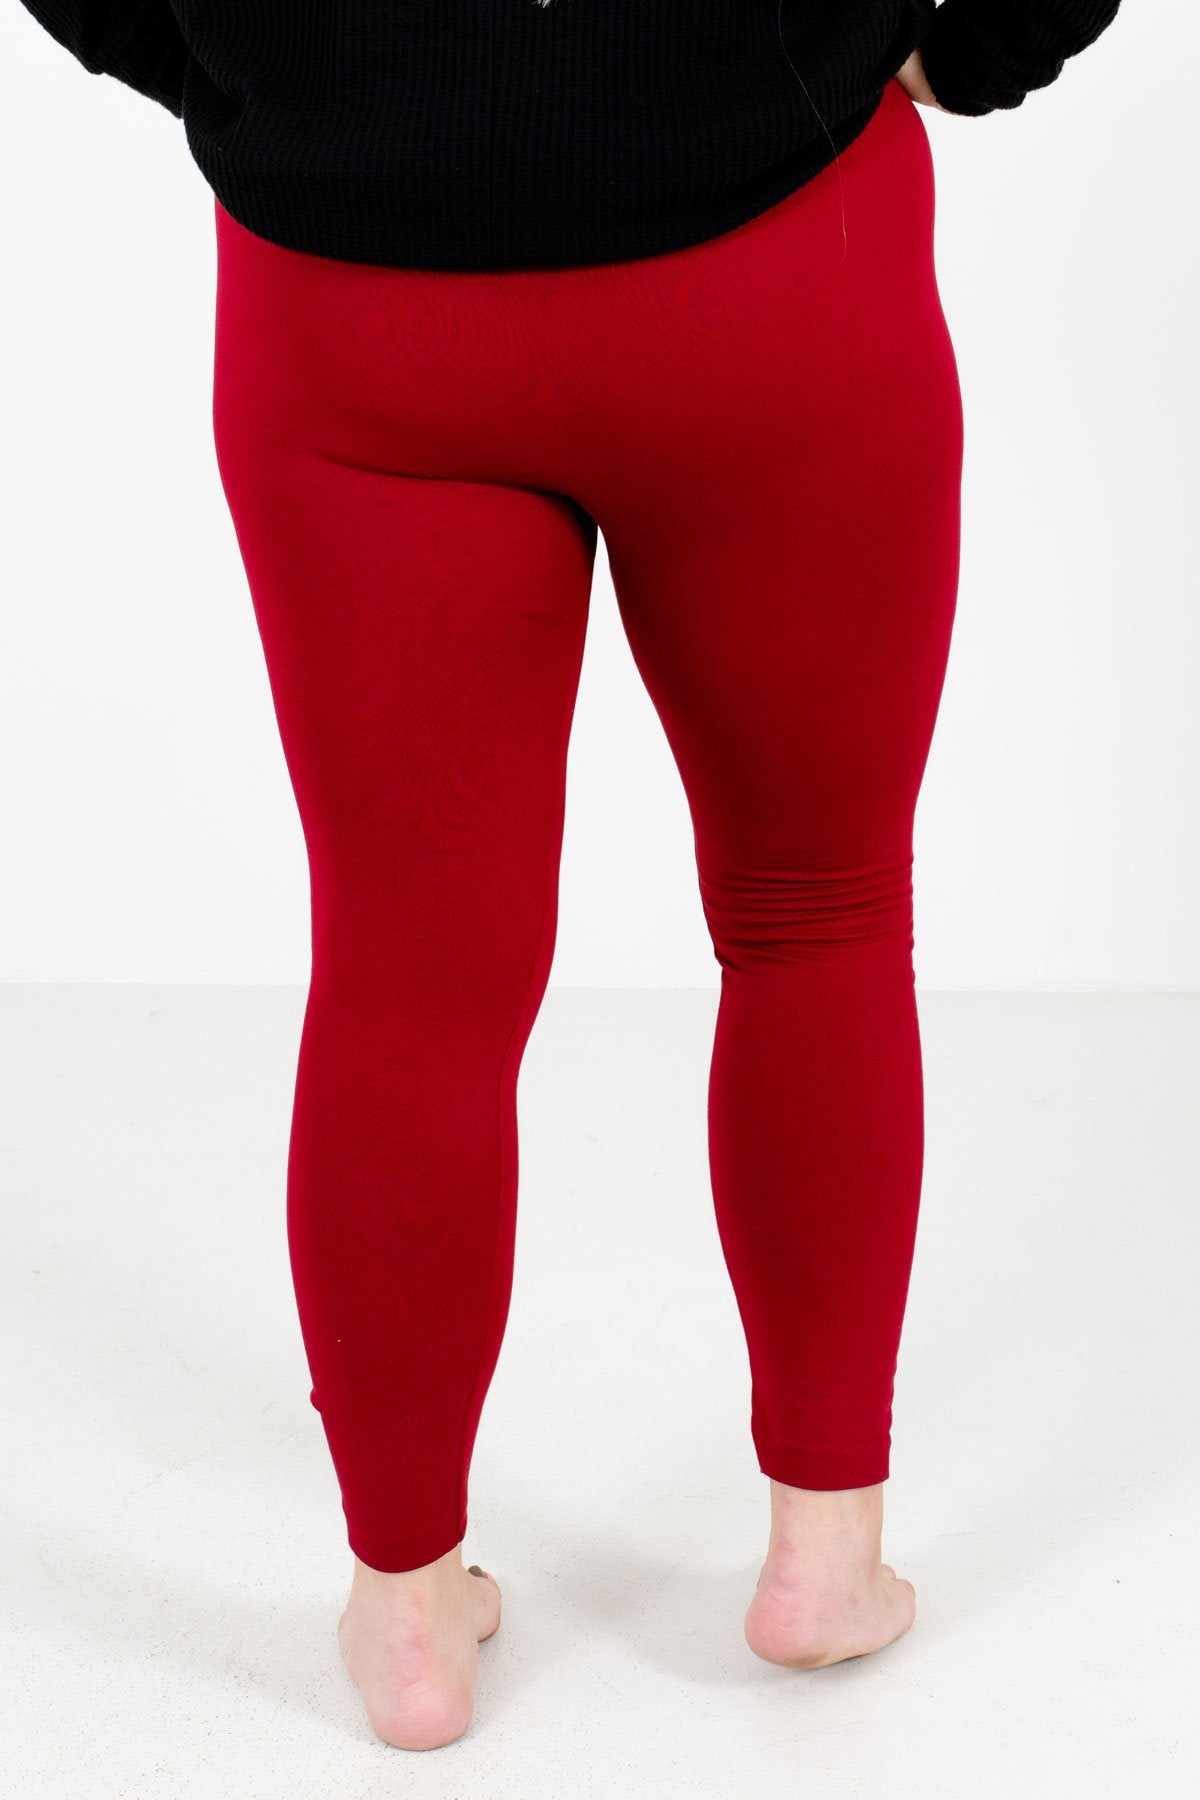 Winter Wonderland Cranberry Red Fleece-Lined Curvy Leggings